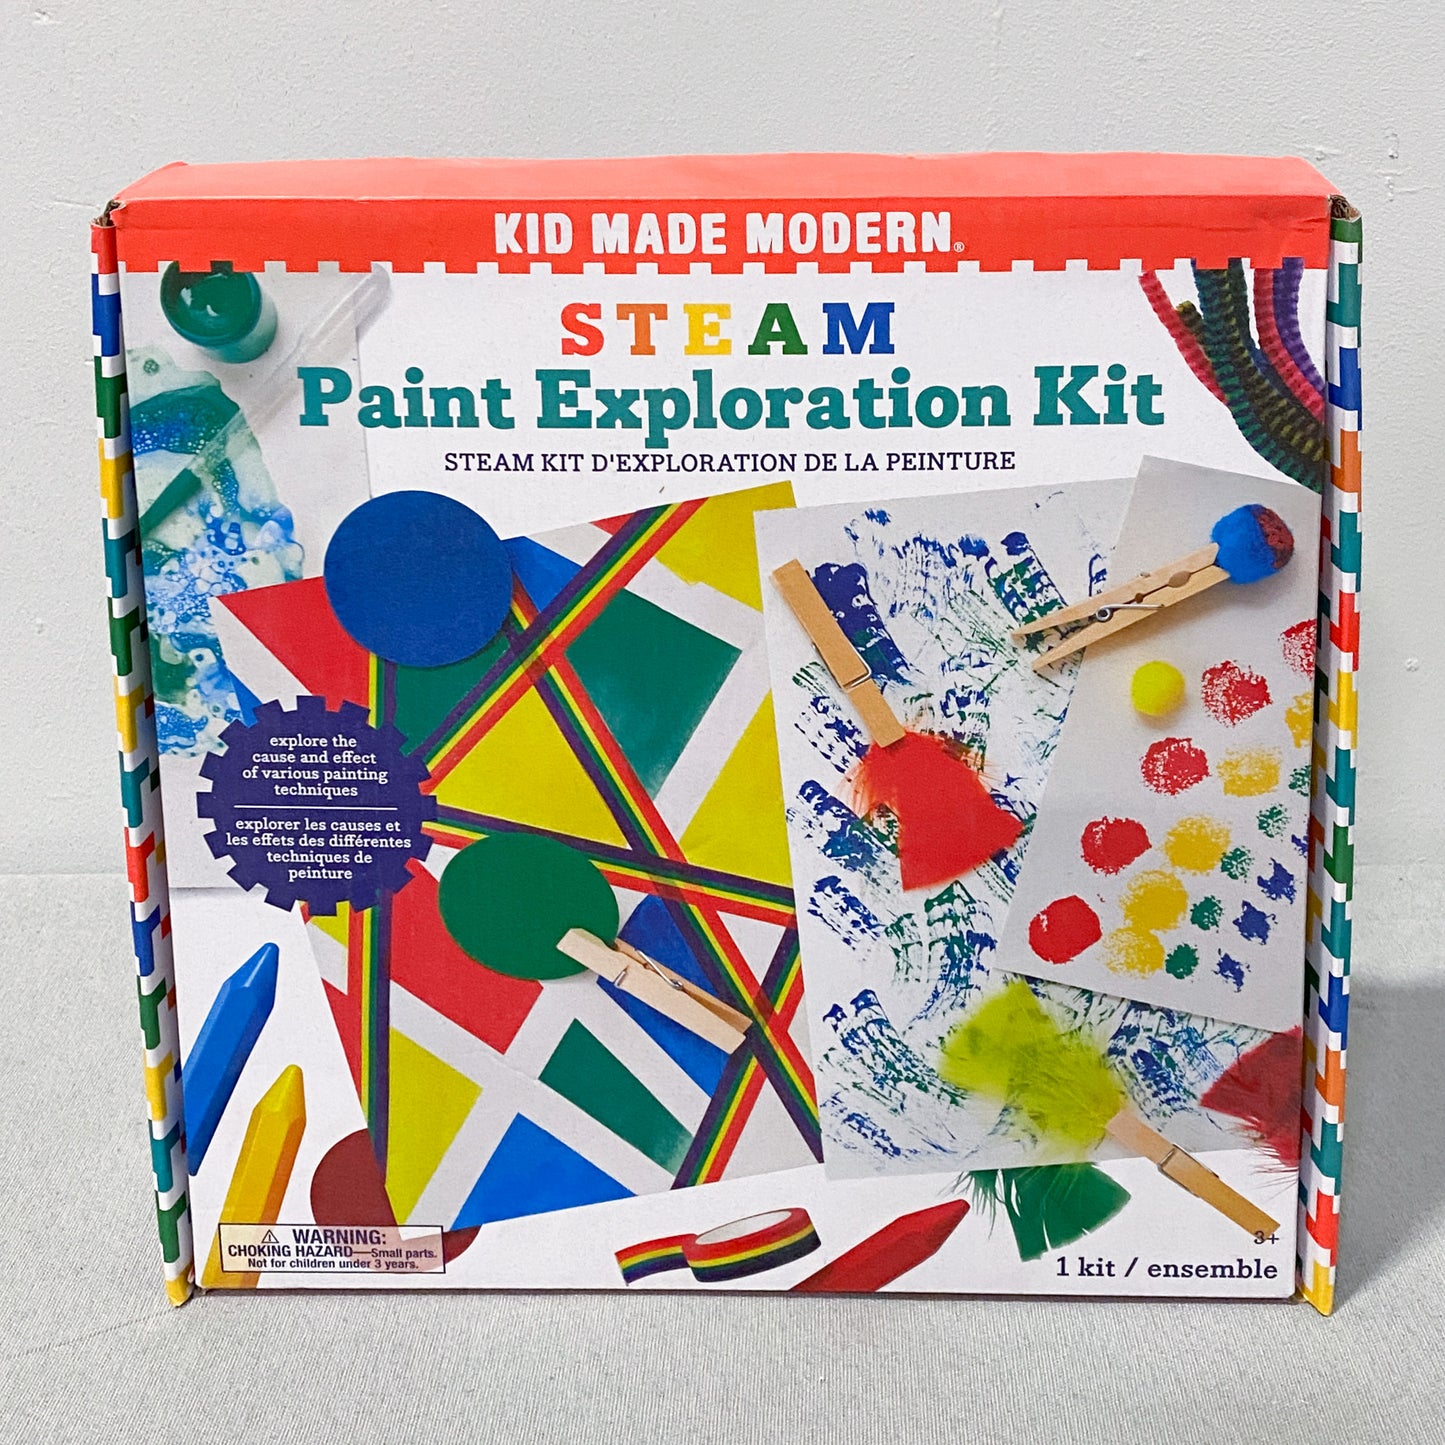 Paint Exploration Kit